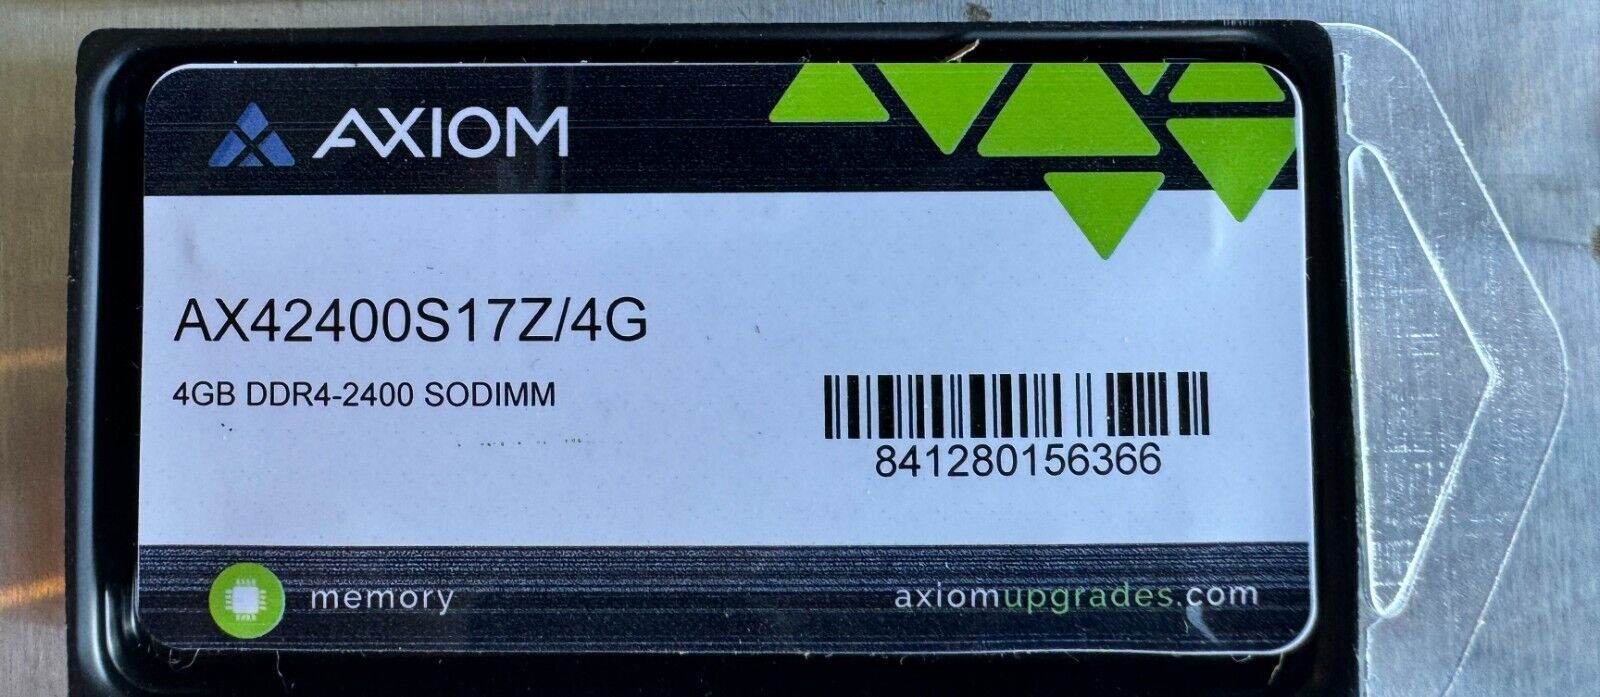 AXIOM AX42400S17Z/4G 4GB DDR4-2400 SODIMM for Lenovo Laptops